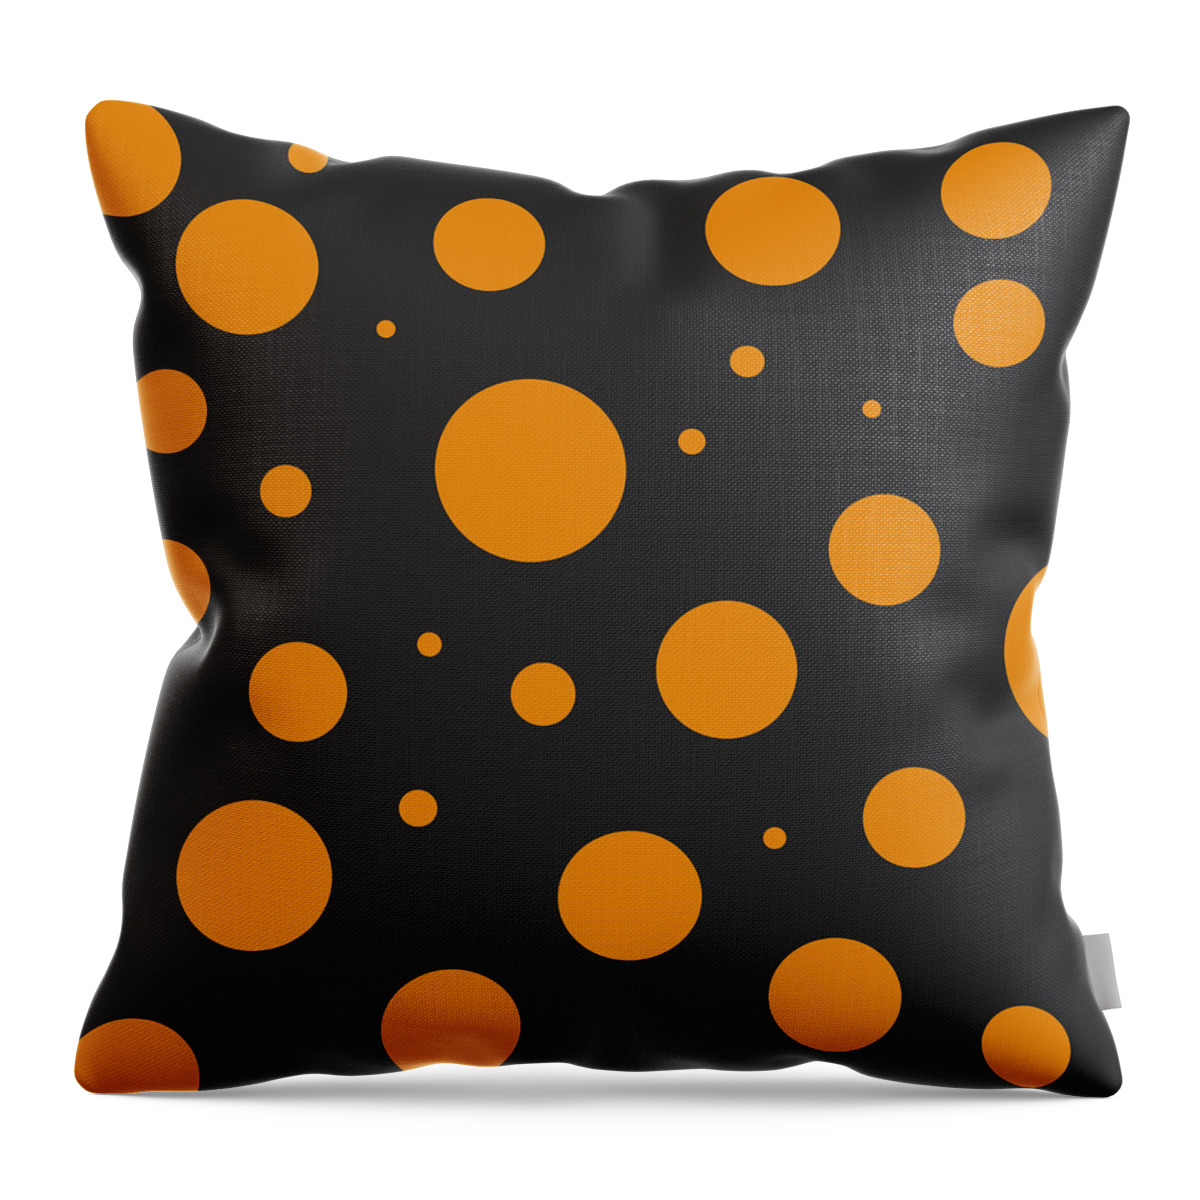 Polka Throw Pillow featuring the digital art Orange Polka Dot Pattern on Black by Jason Fink